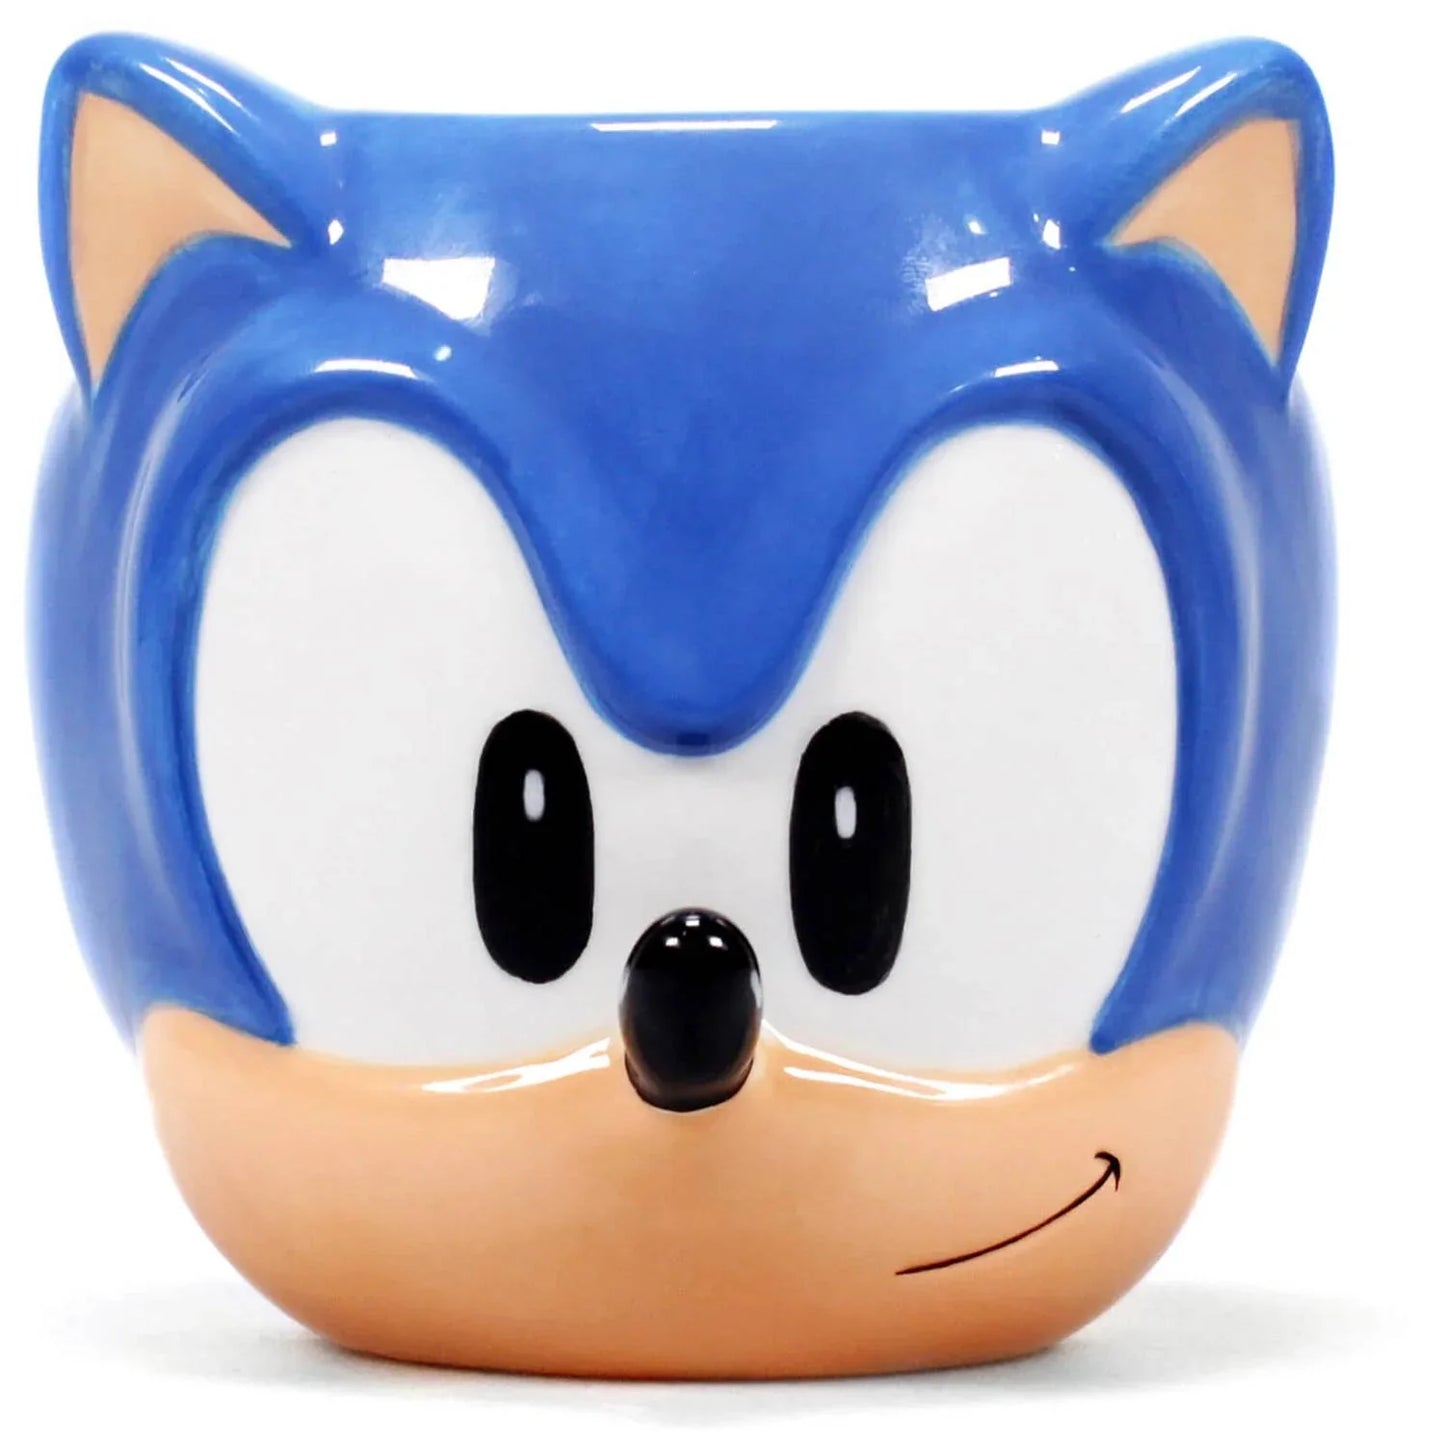 Mug 3D Sonic